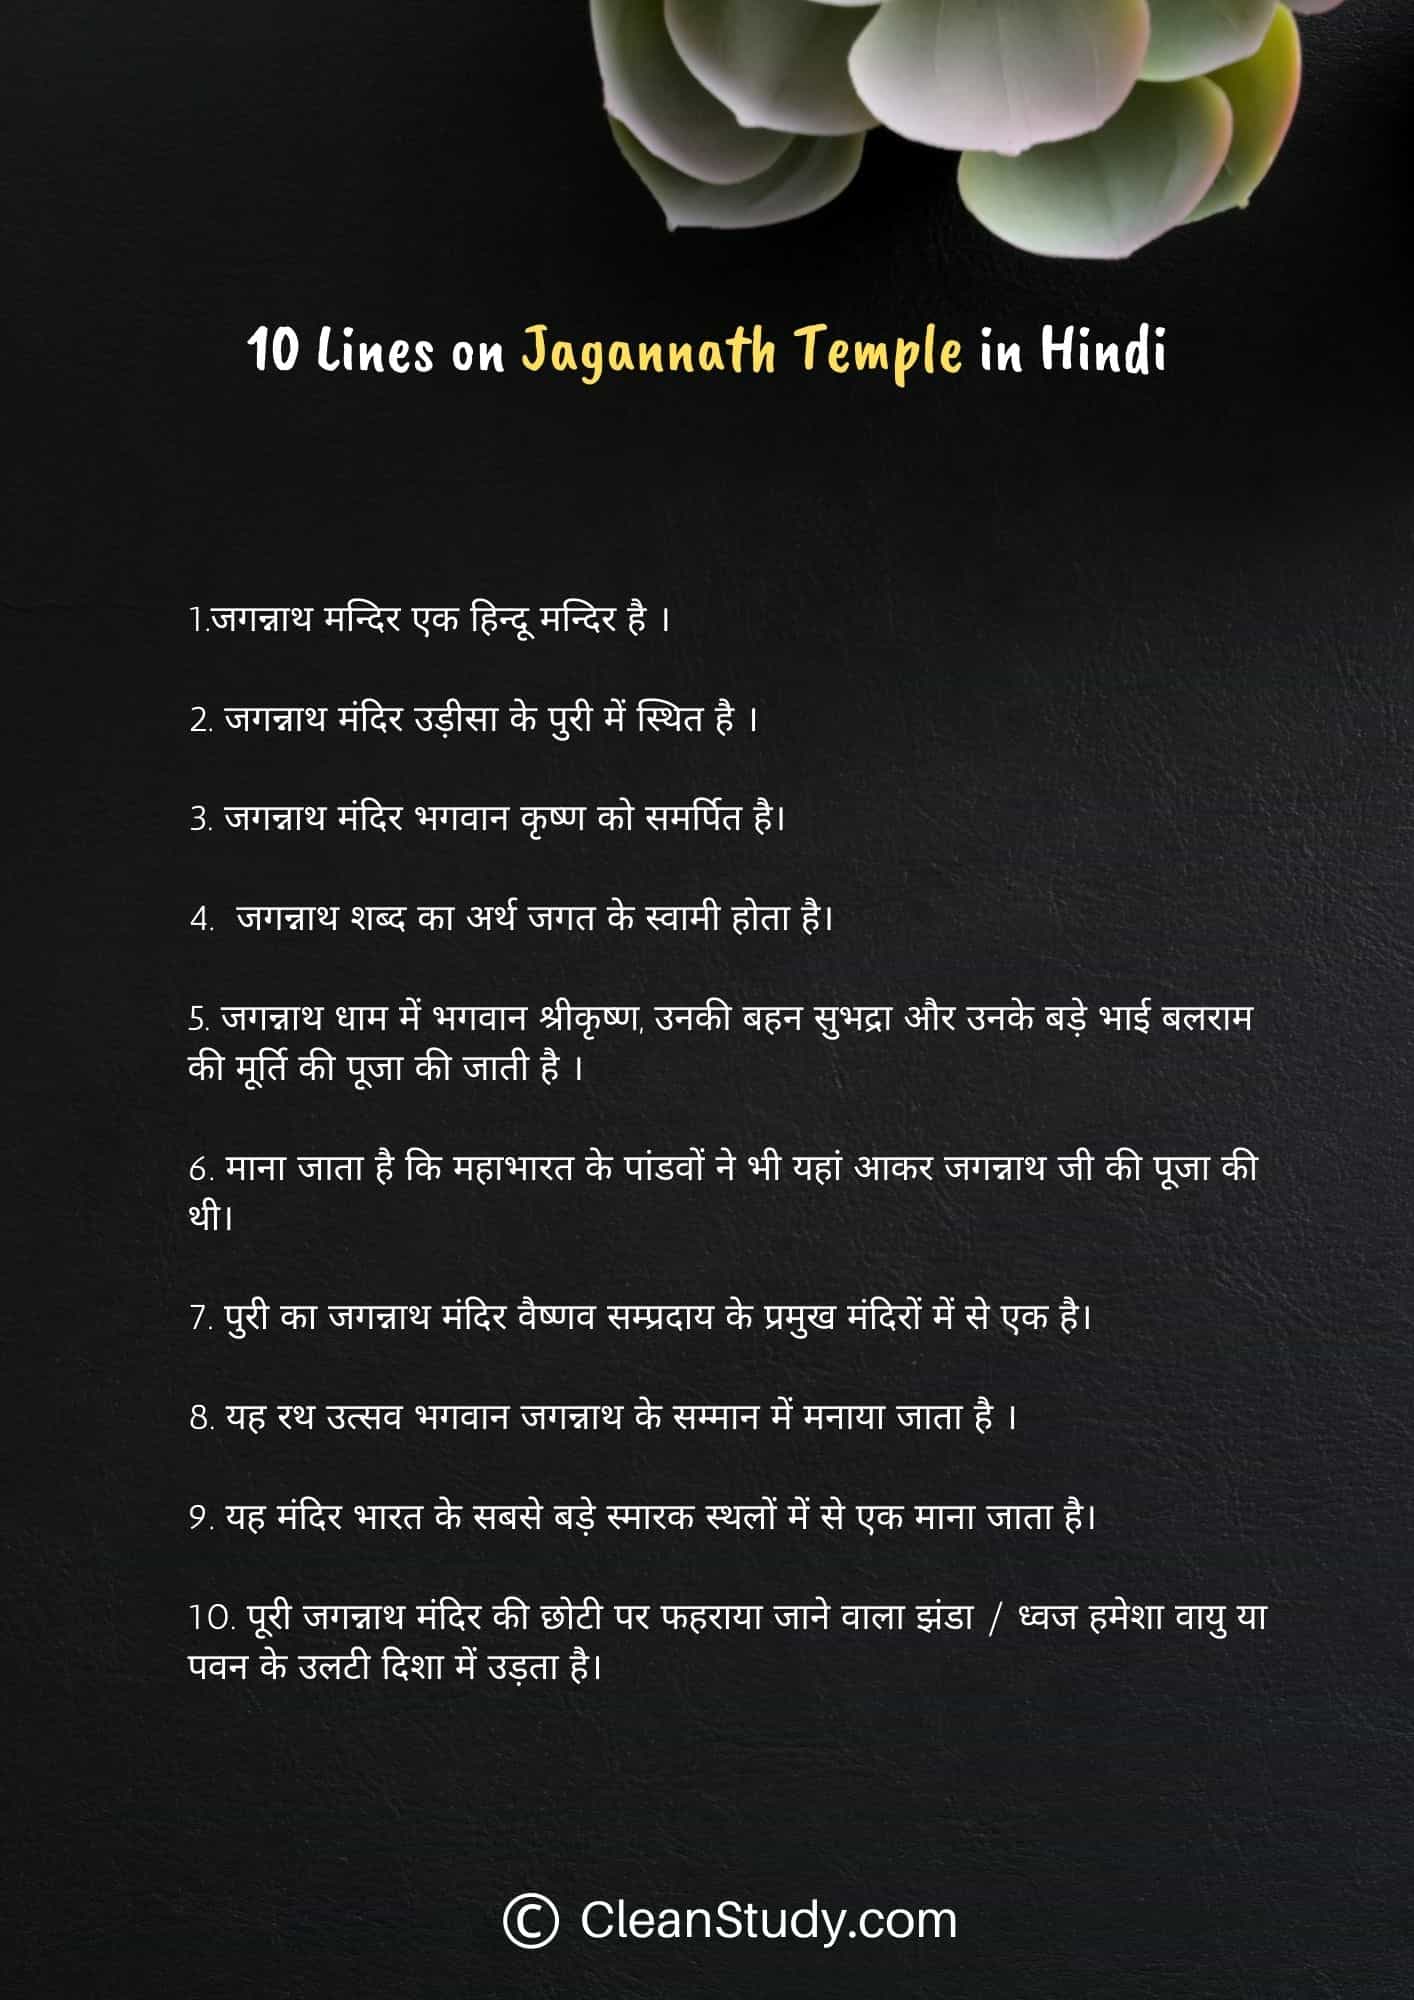 10 Lines on Jagannath Temple in Hindi